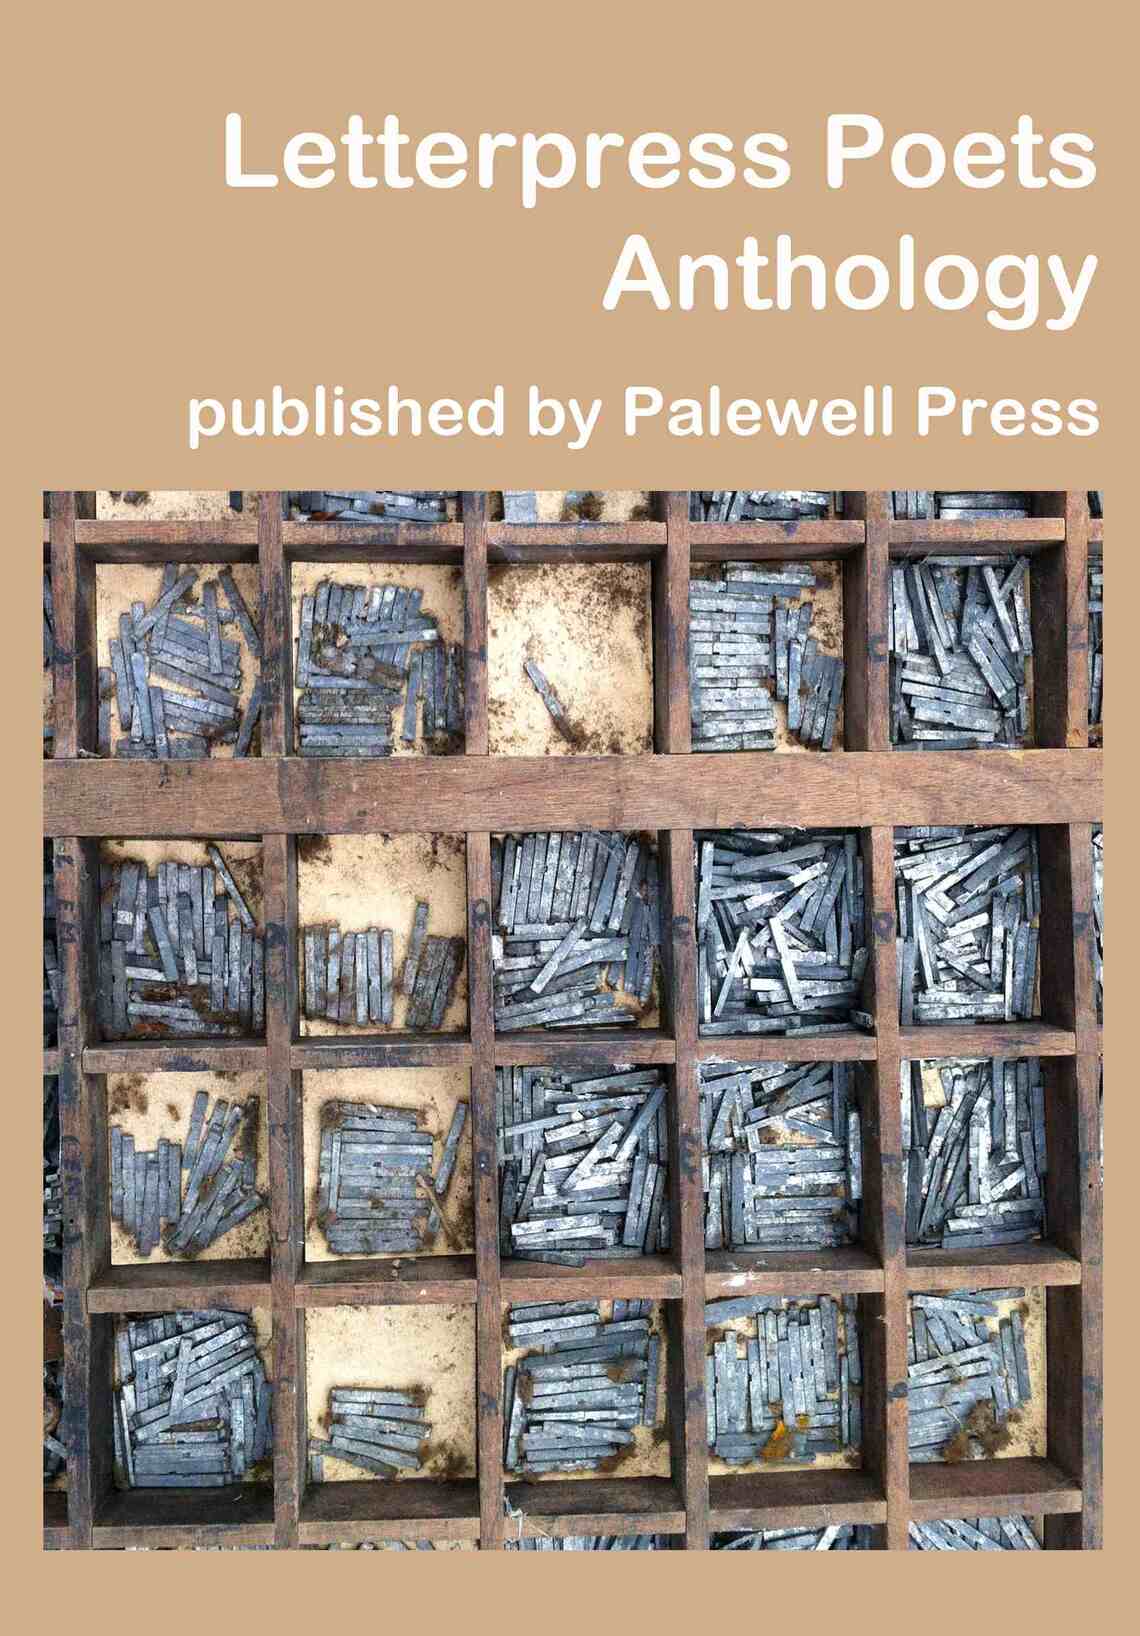 The Letterpress Poets Anthology